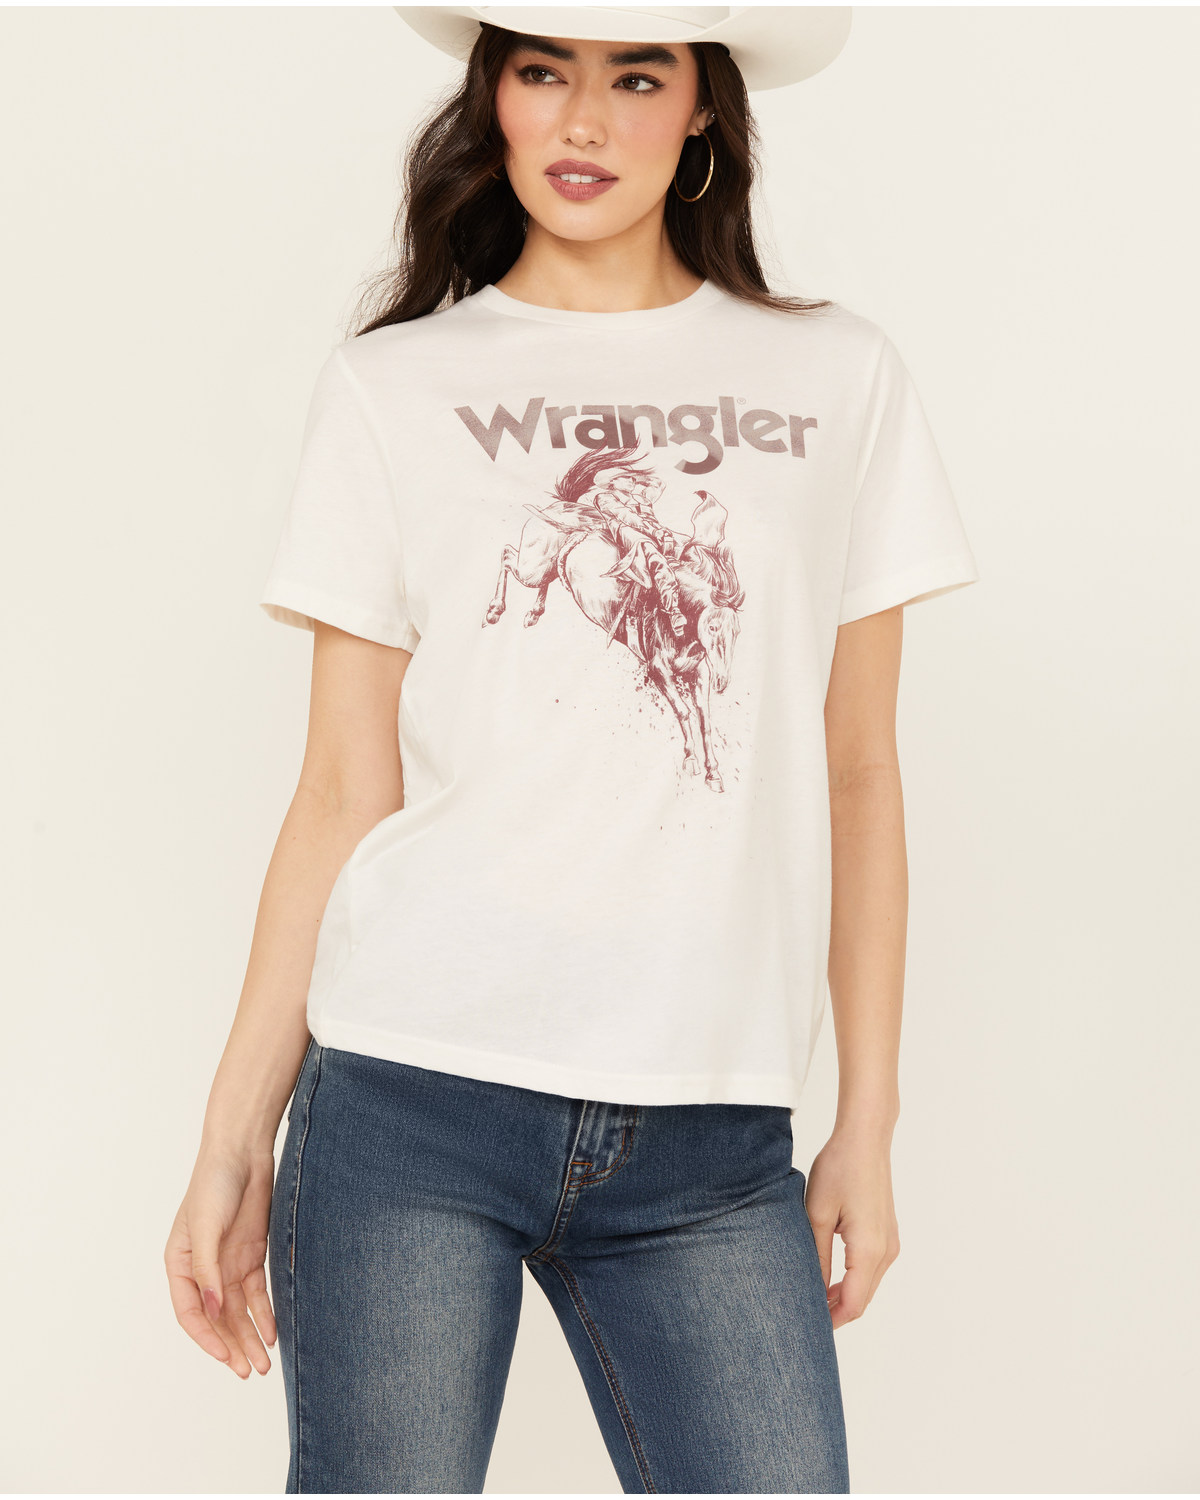 Wrangler Women's Bucking Bronco Logo Short Sleeve Graphic Tee